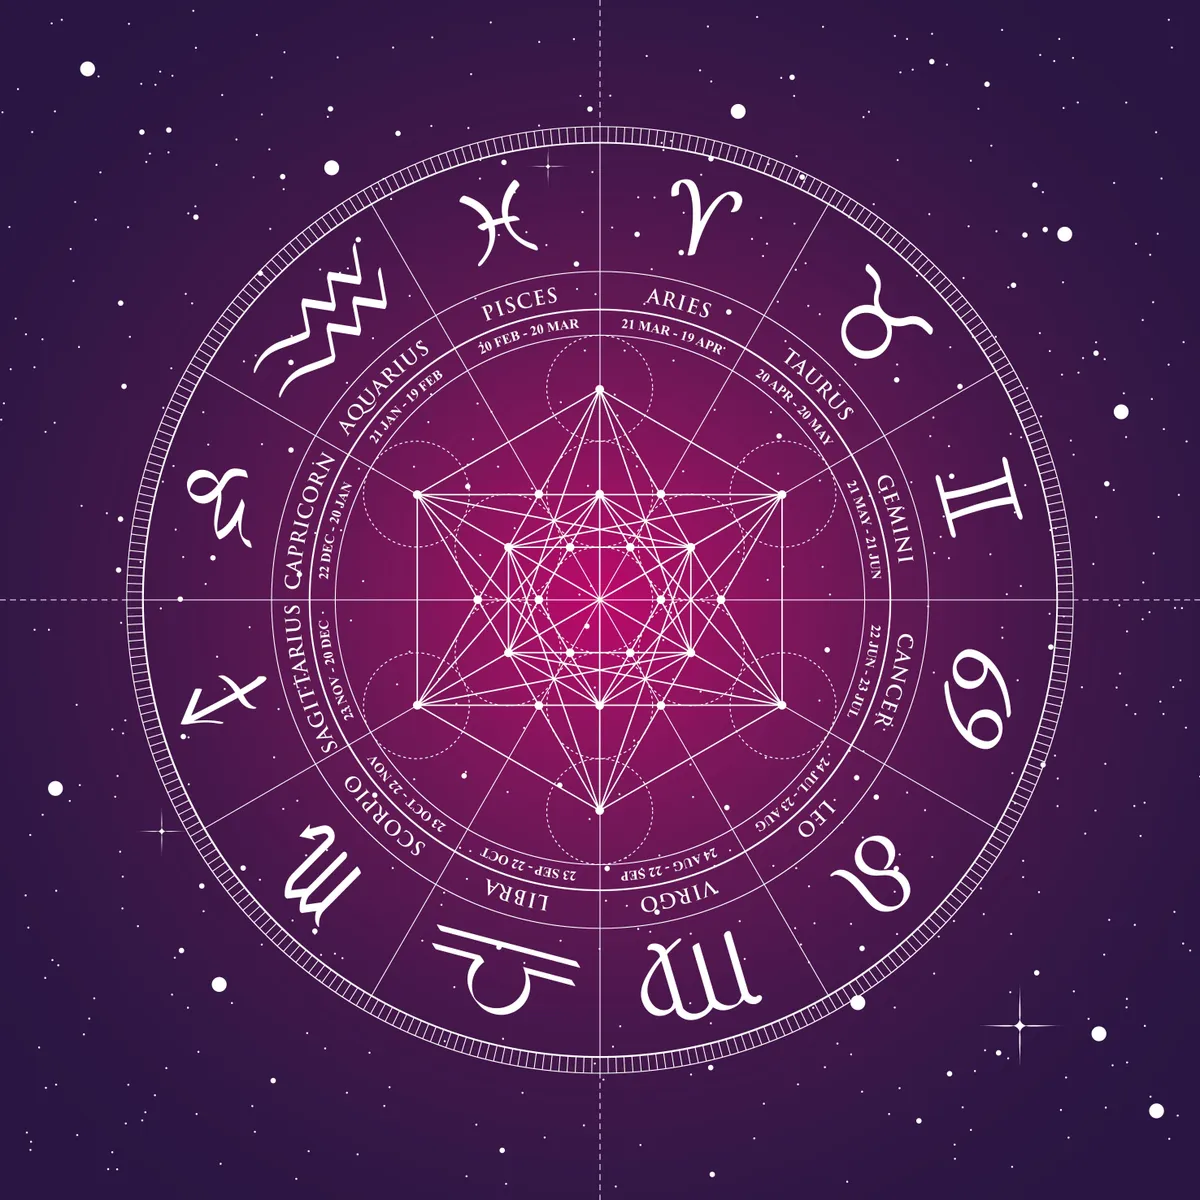 Zodiac signs in a circle. | Source: Shutterstock